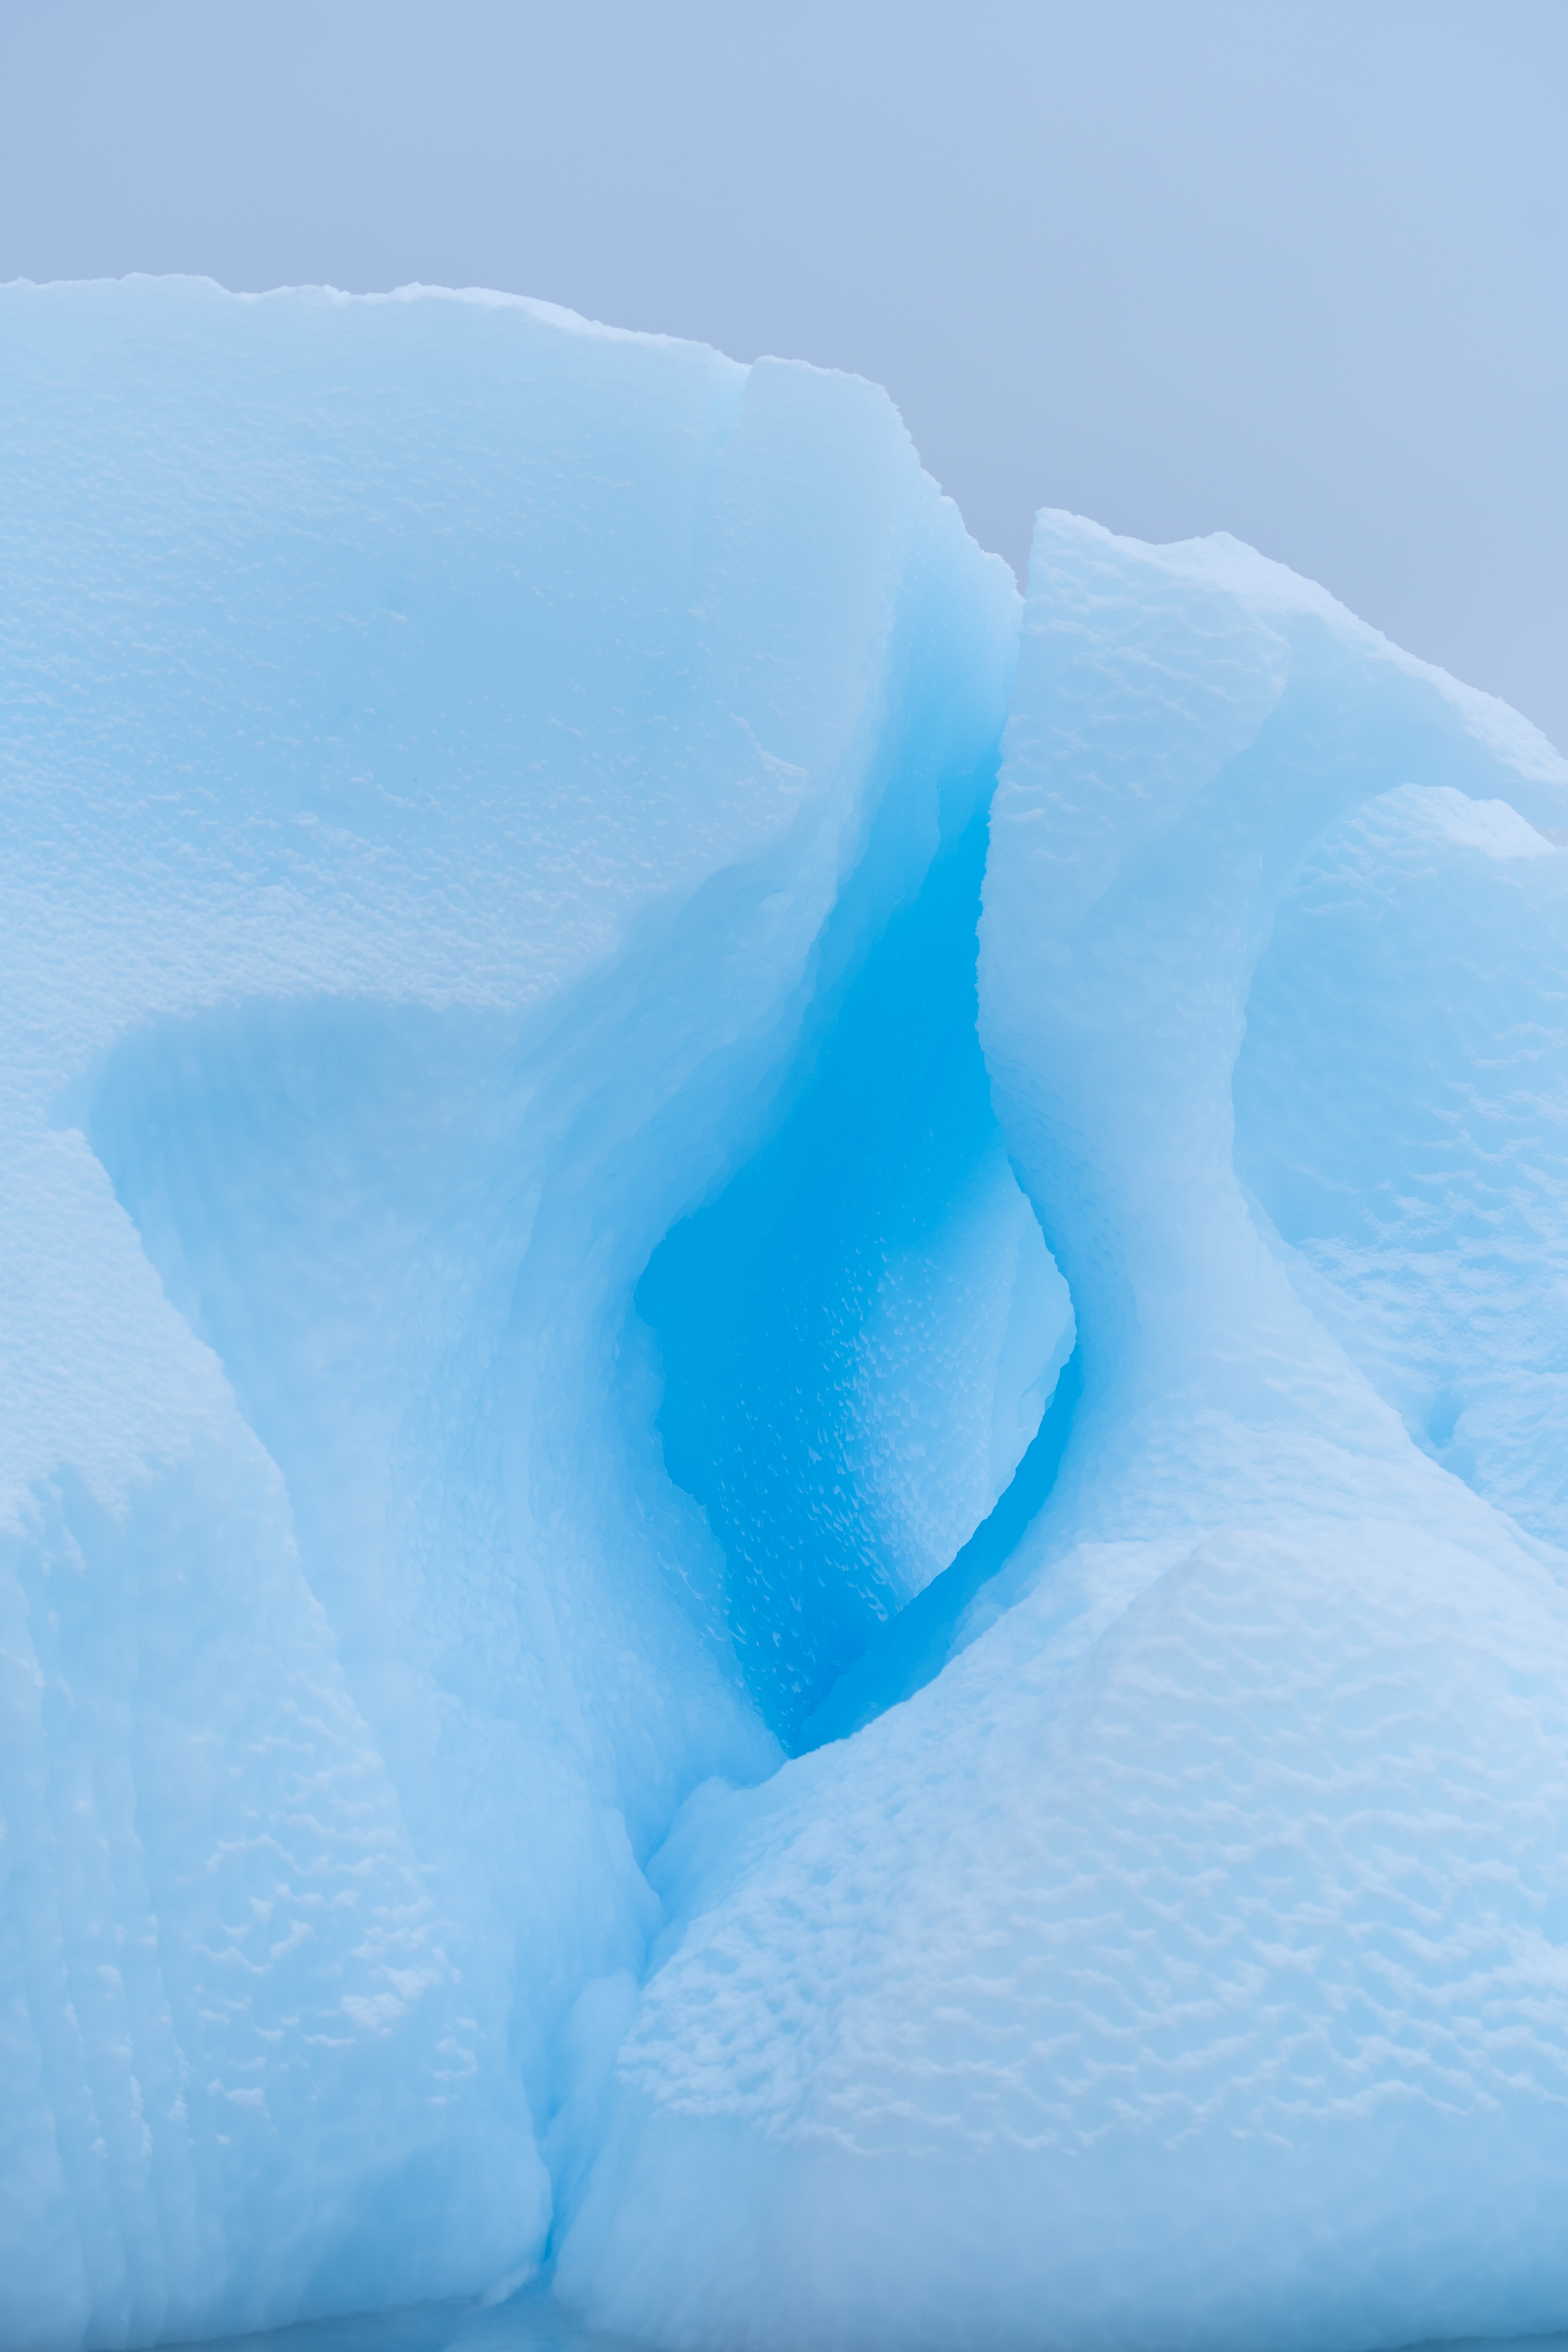 Скачать обои бесплатно Ледник, Снег, Лед, Природа, Антарктида картинка на рабочий стол ПК